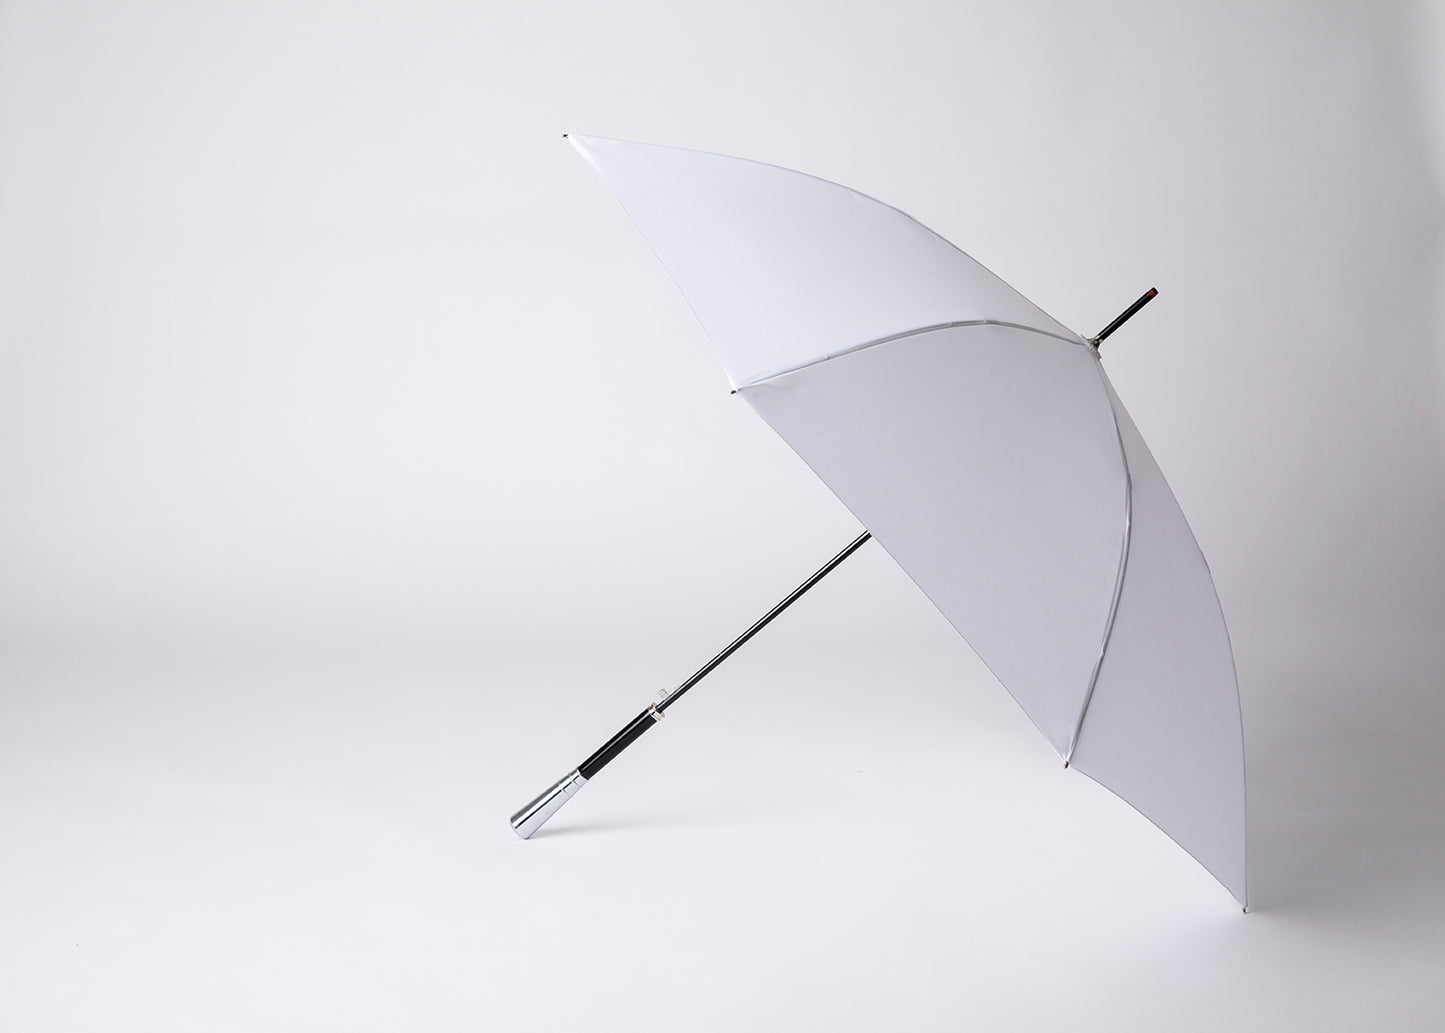 The Wedding Umbrella